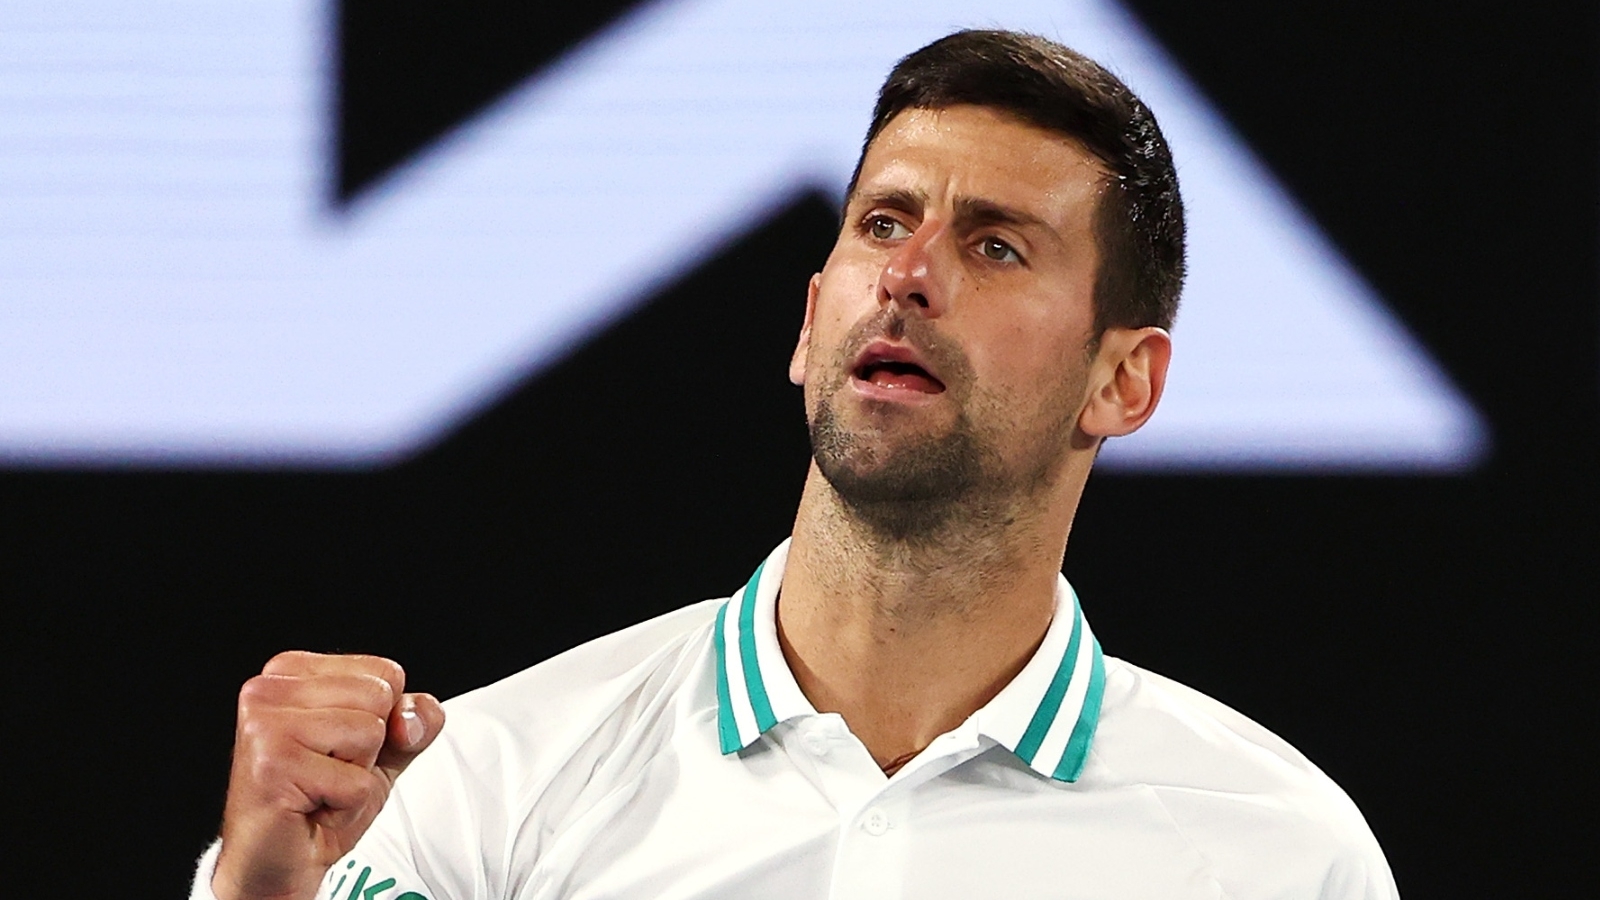 Djokovic steps closer to 9th Australian Open title - Stream the Video